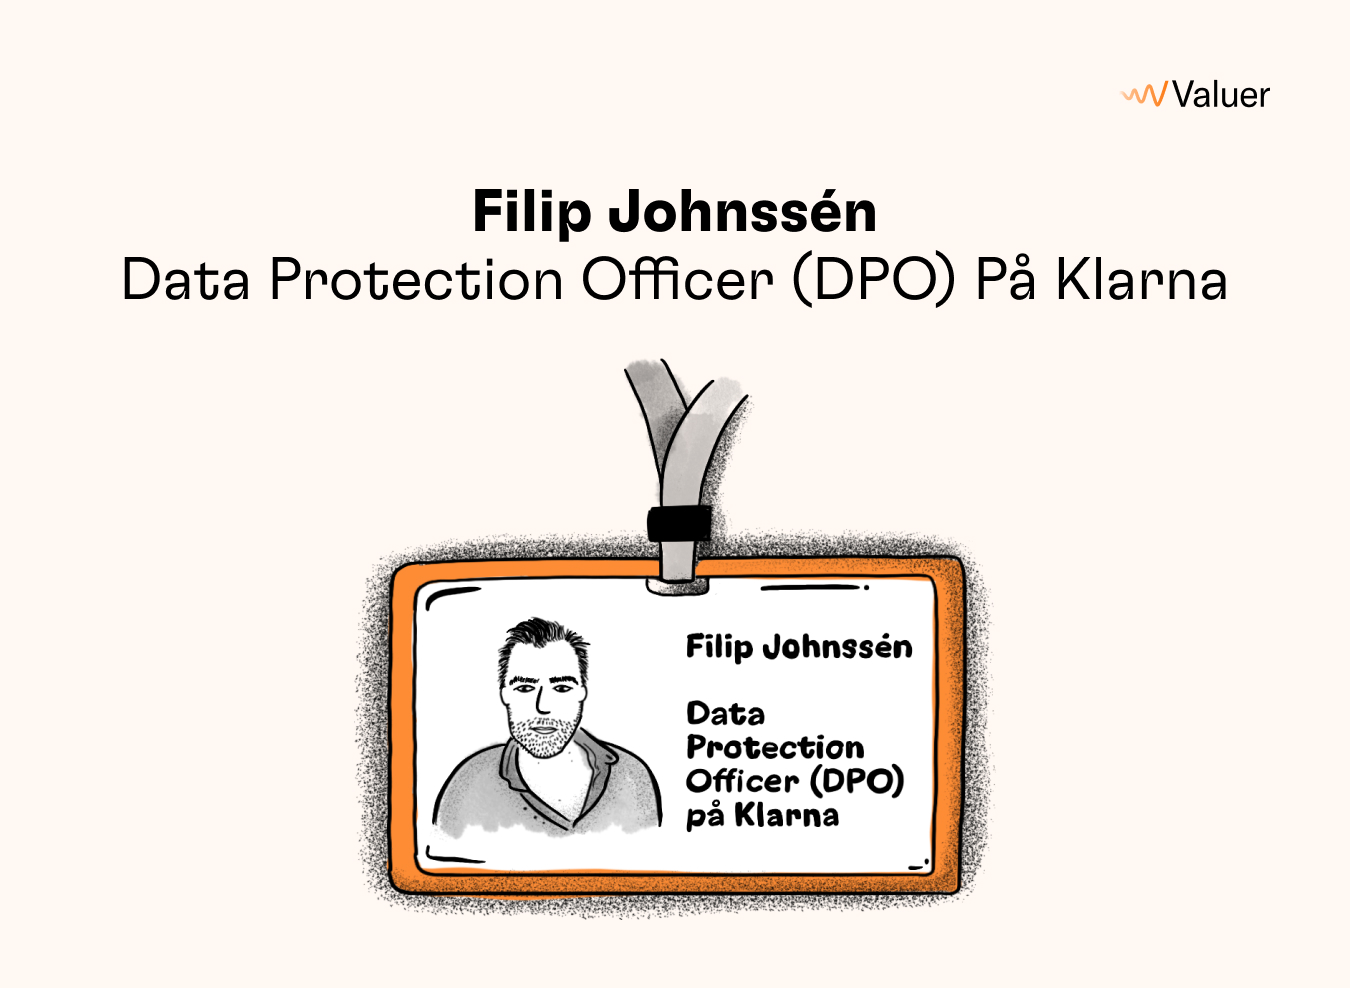 Filip-Johnssen-Data-Protection-Officer-at-Klarna